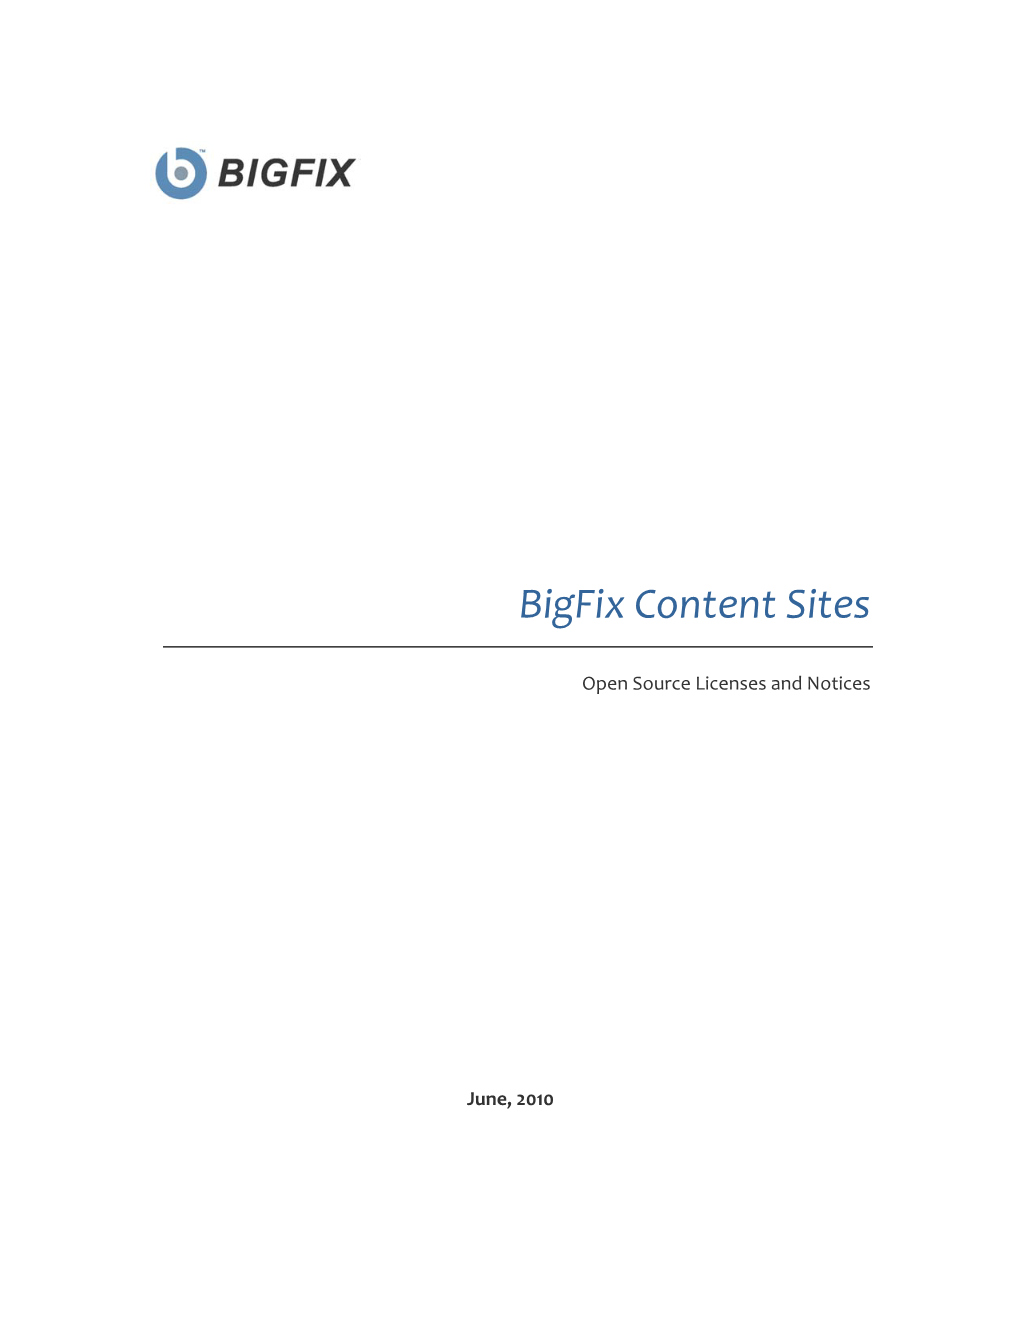 Bigfix Content Sites